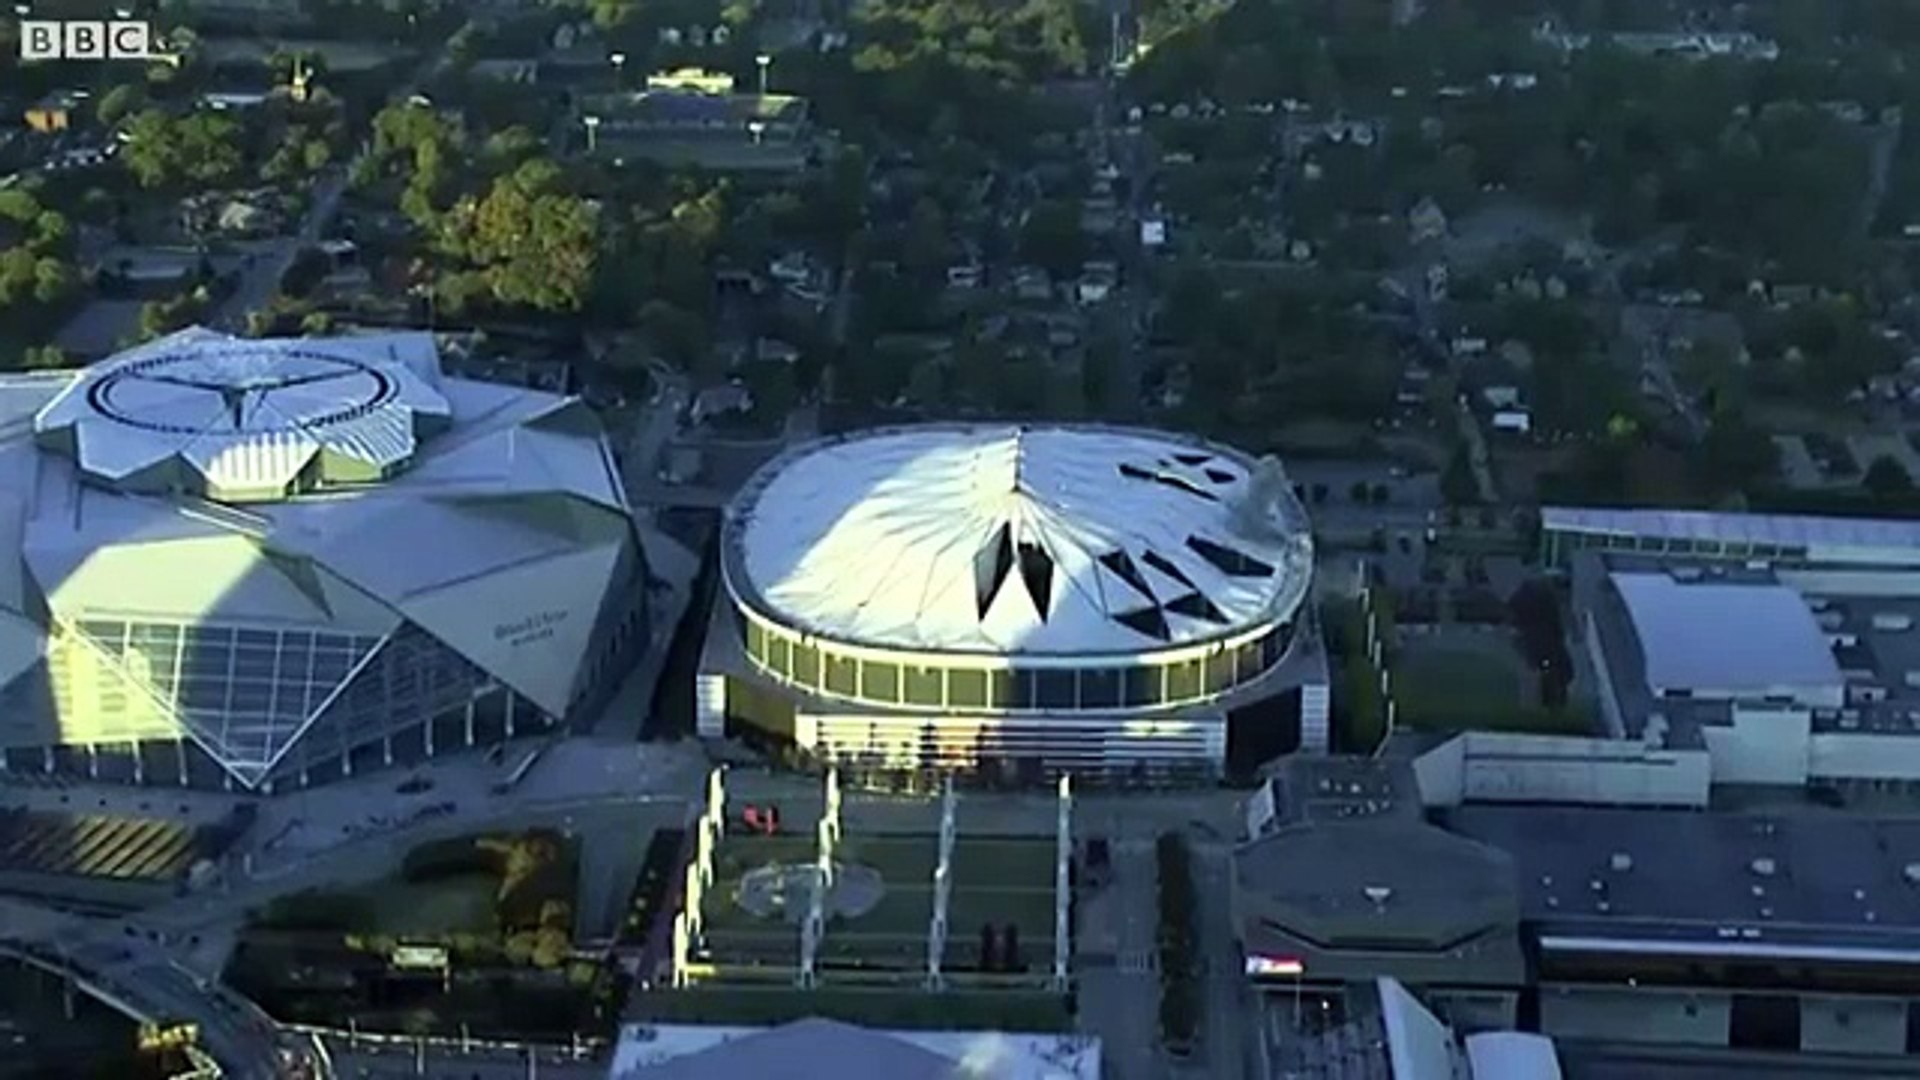 Latest News Today : Georgia Dome stadium is demolished in Atlanta-BBC News